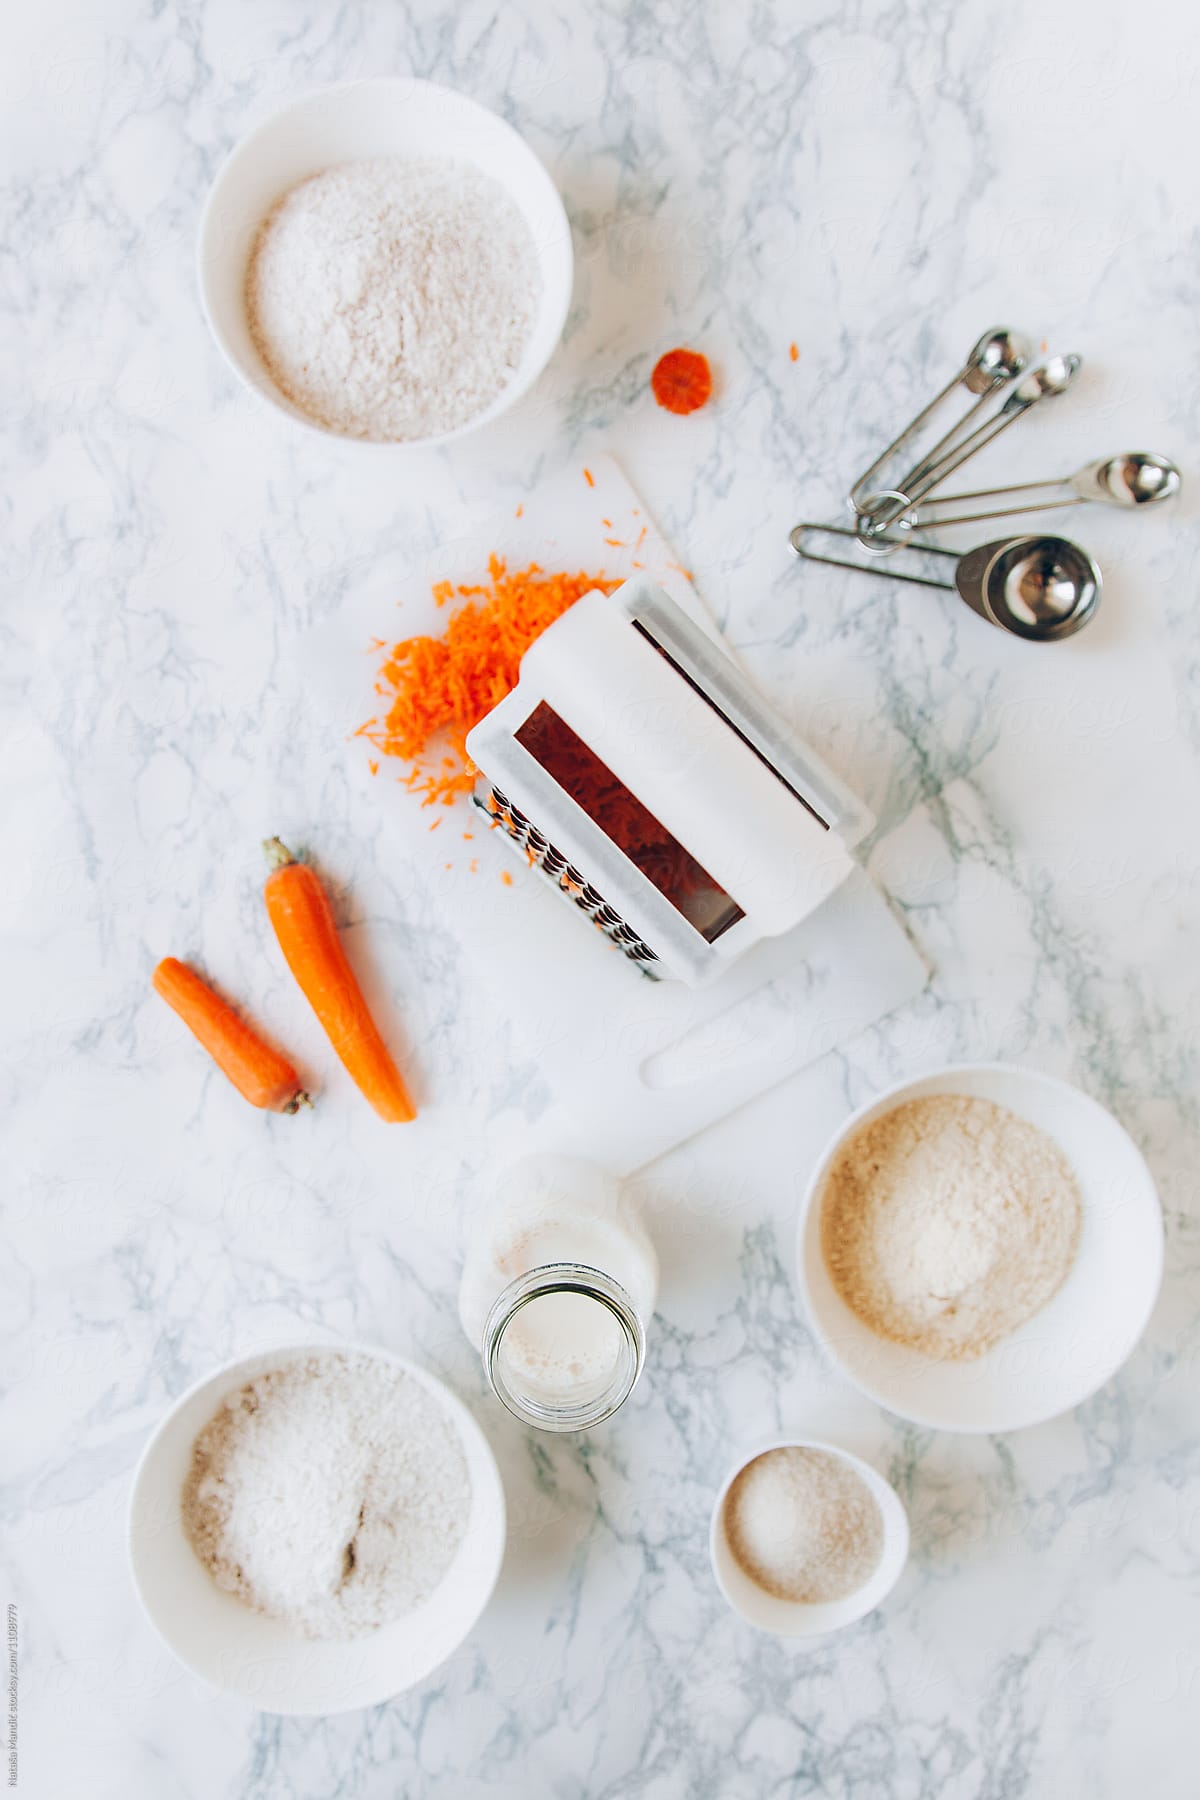 Making a carrot cake